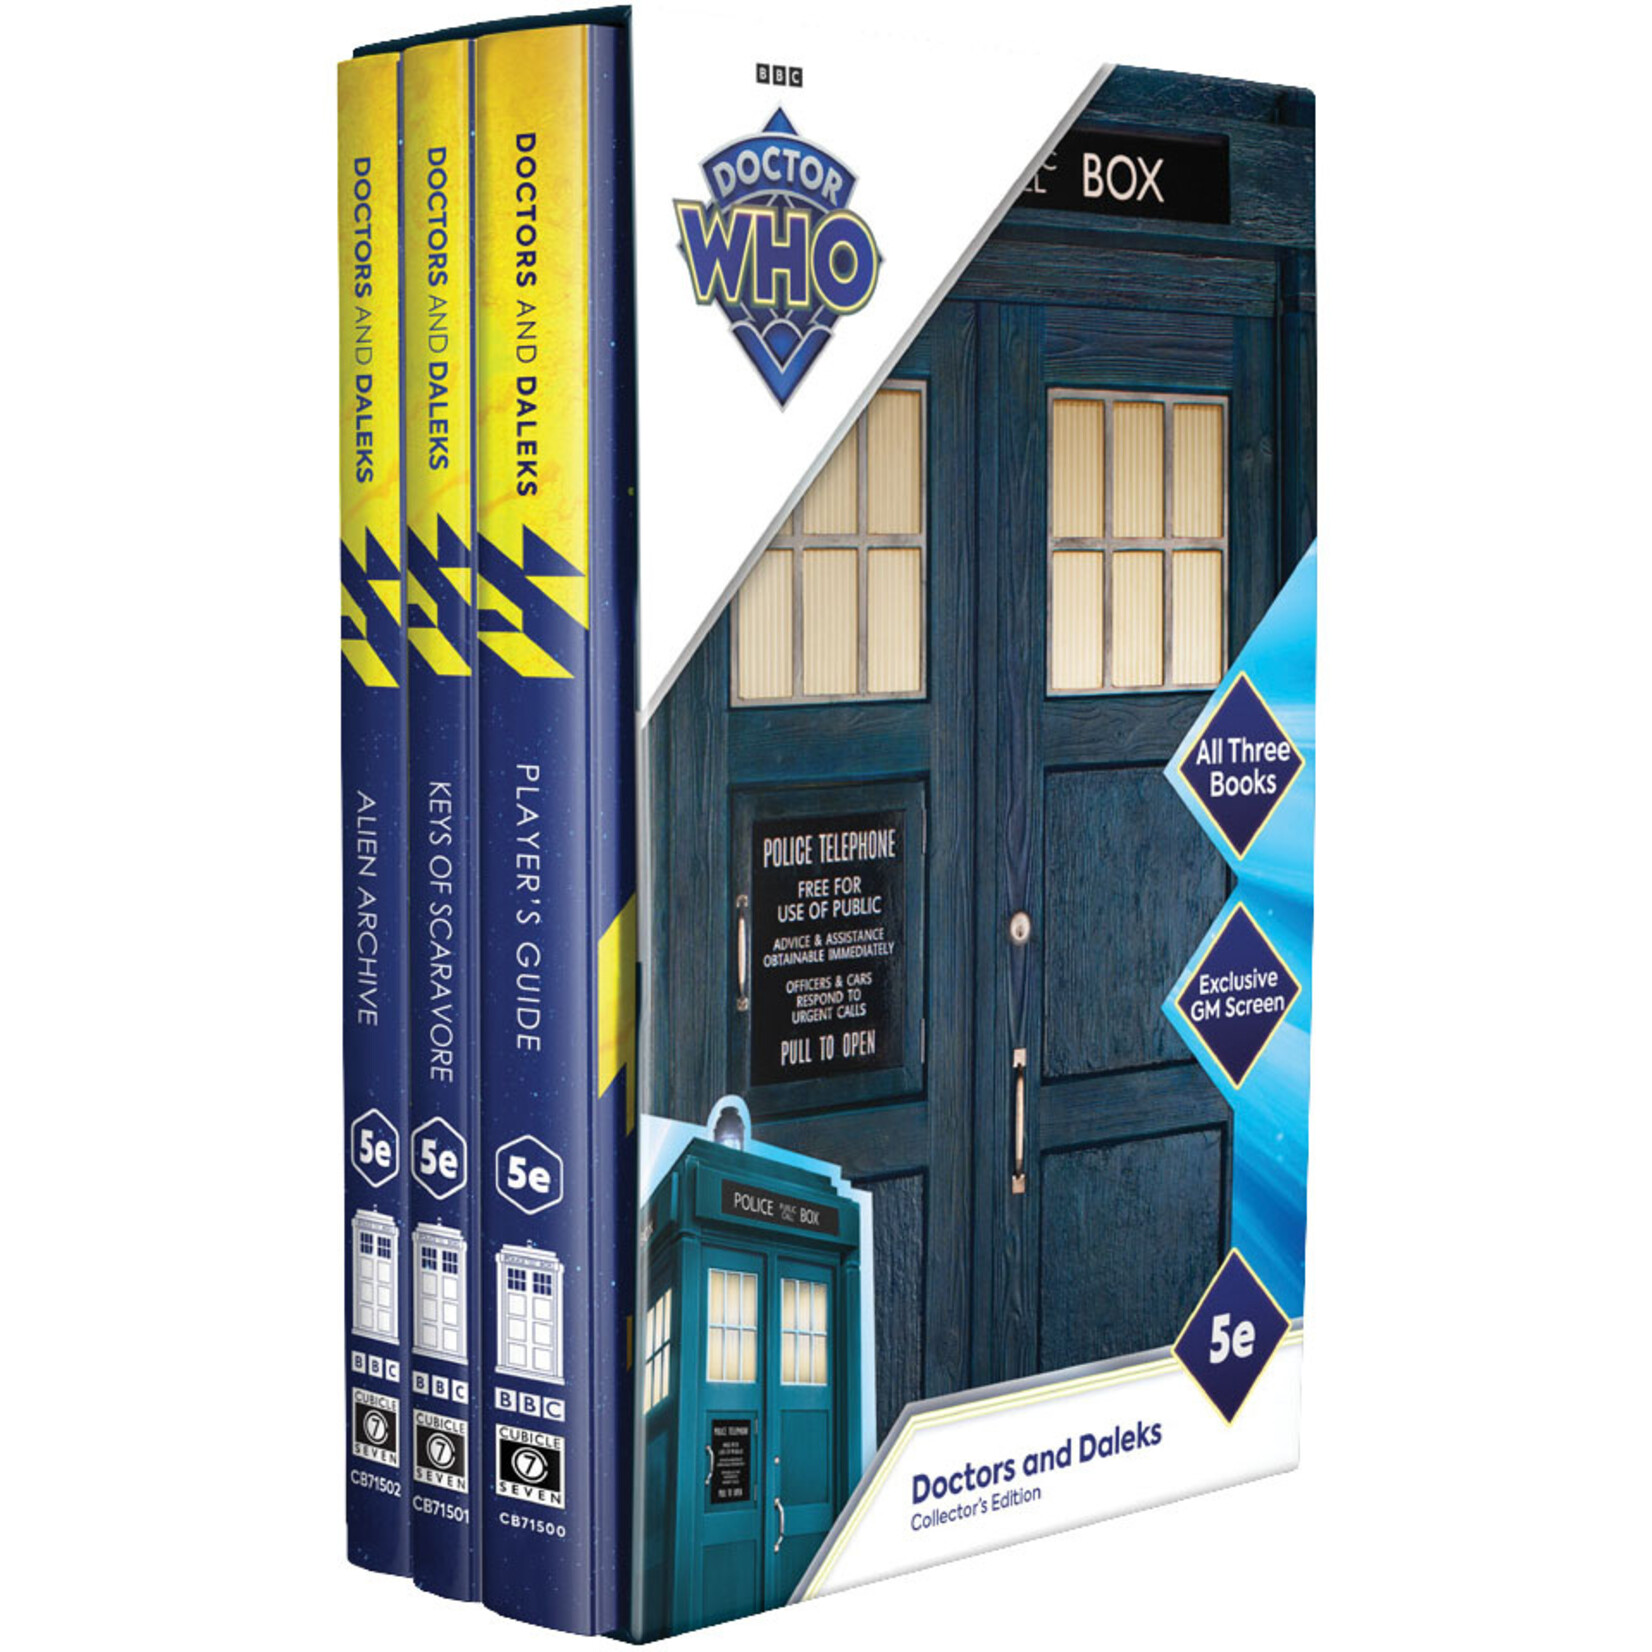 Doctor Who DVD Files, Tardis